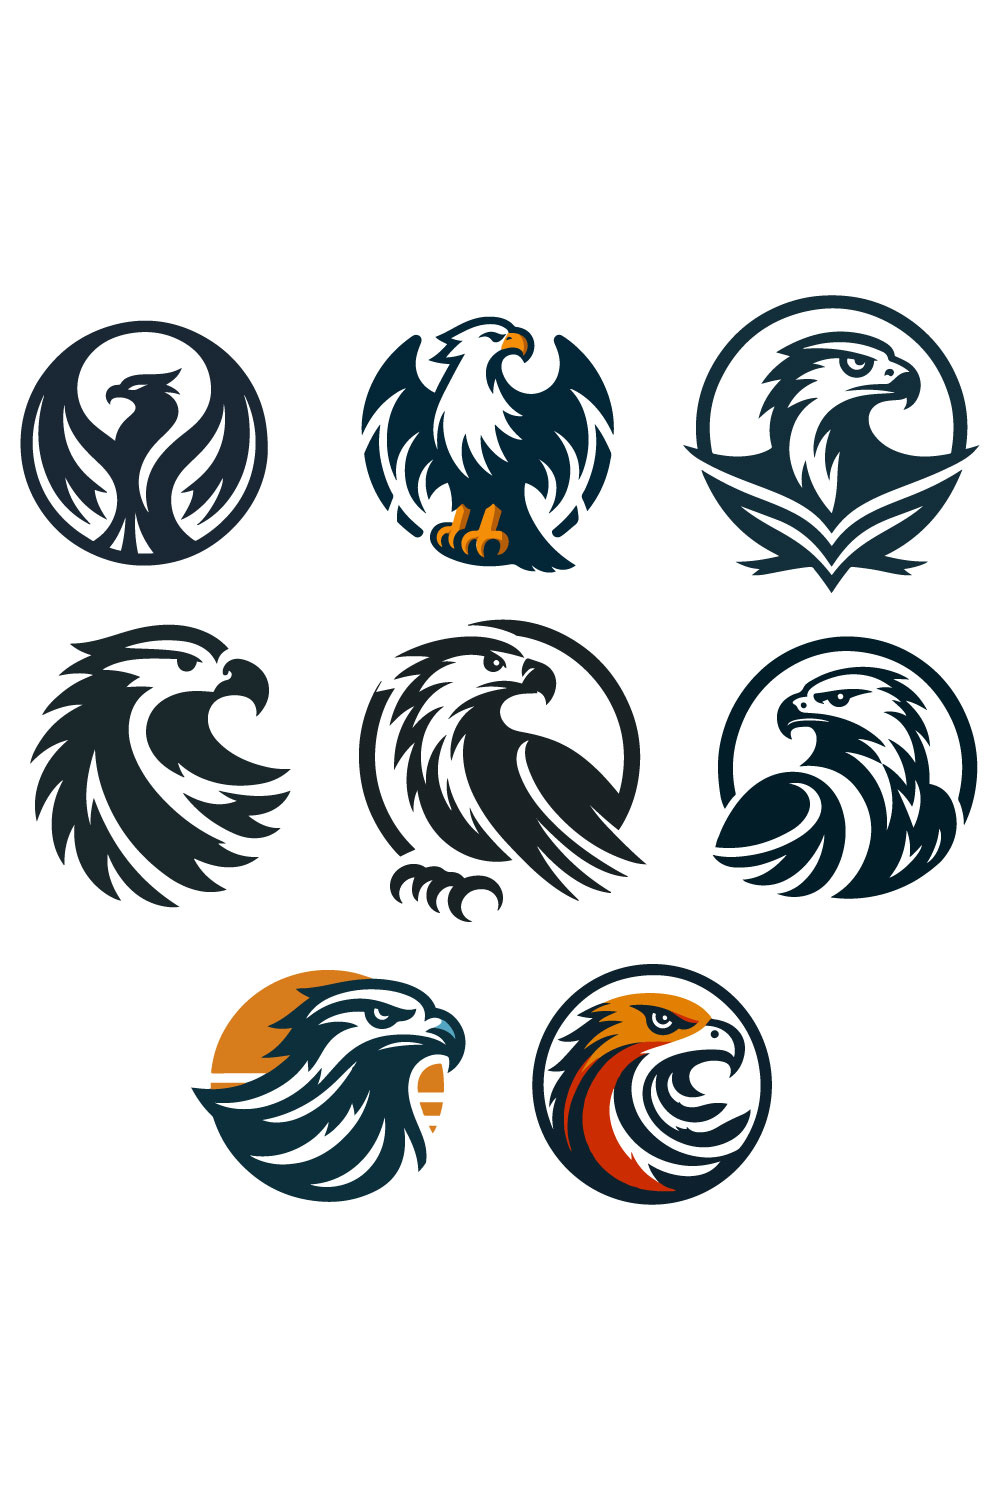 8 Hawk Vector Logos Illustration pinterest preview image.